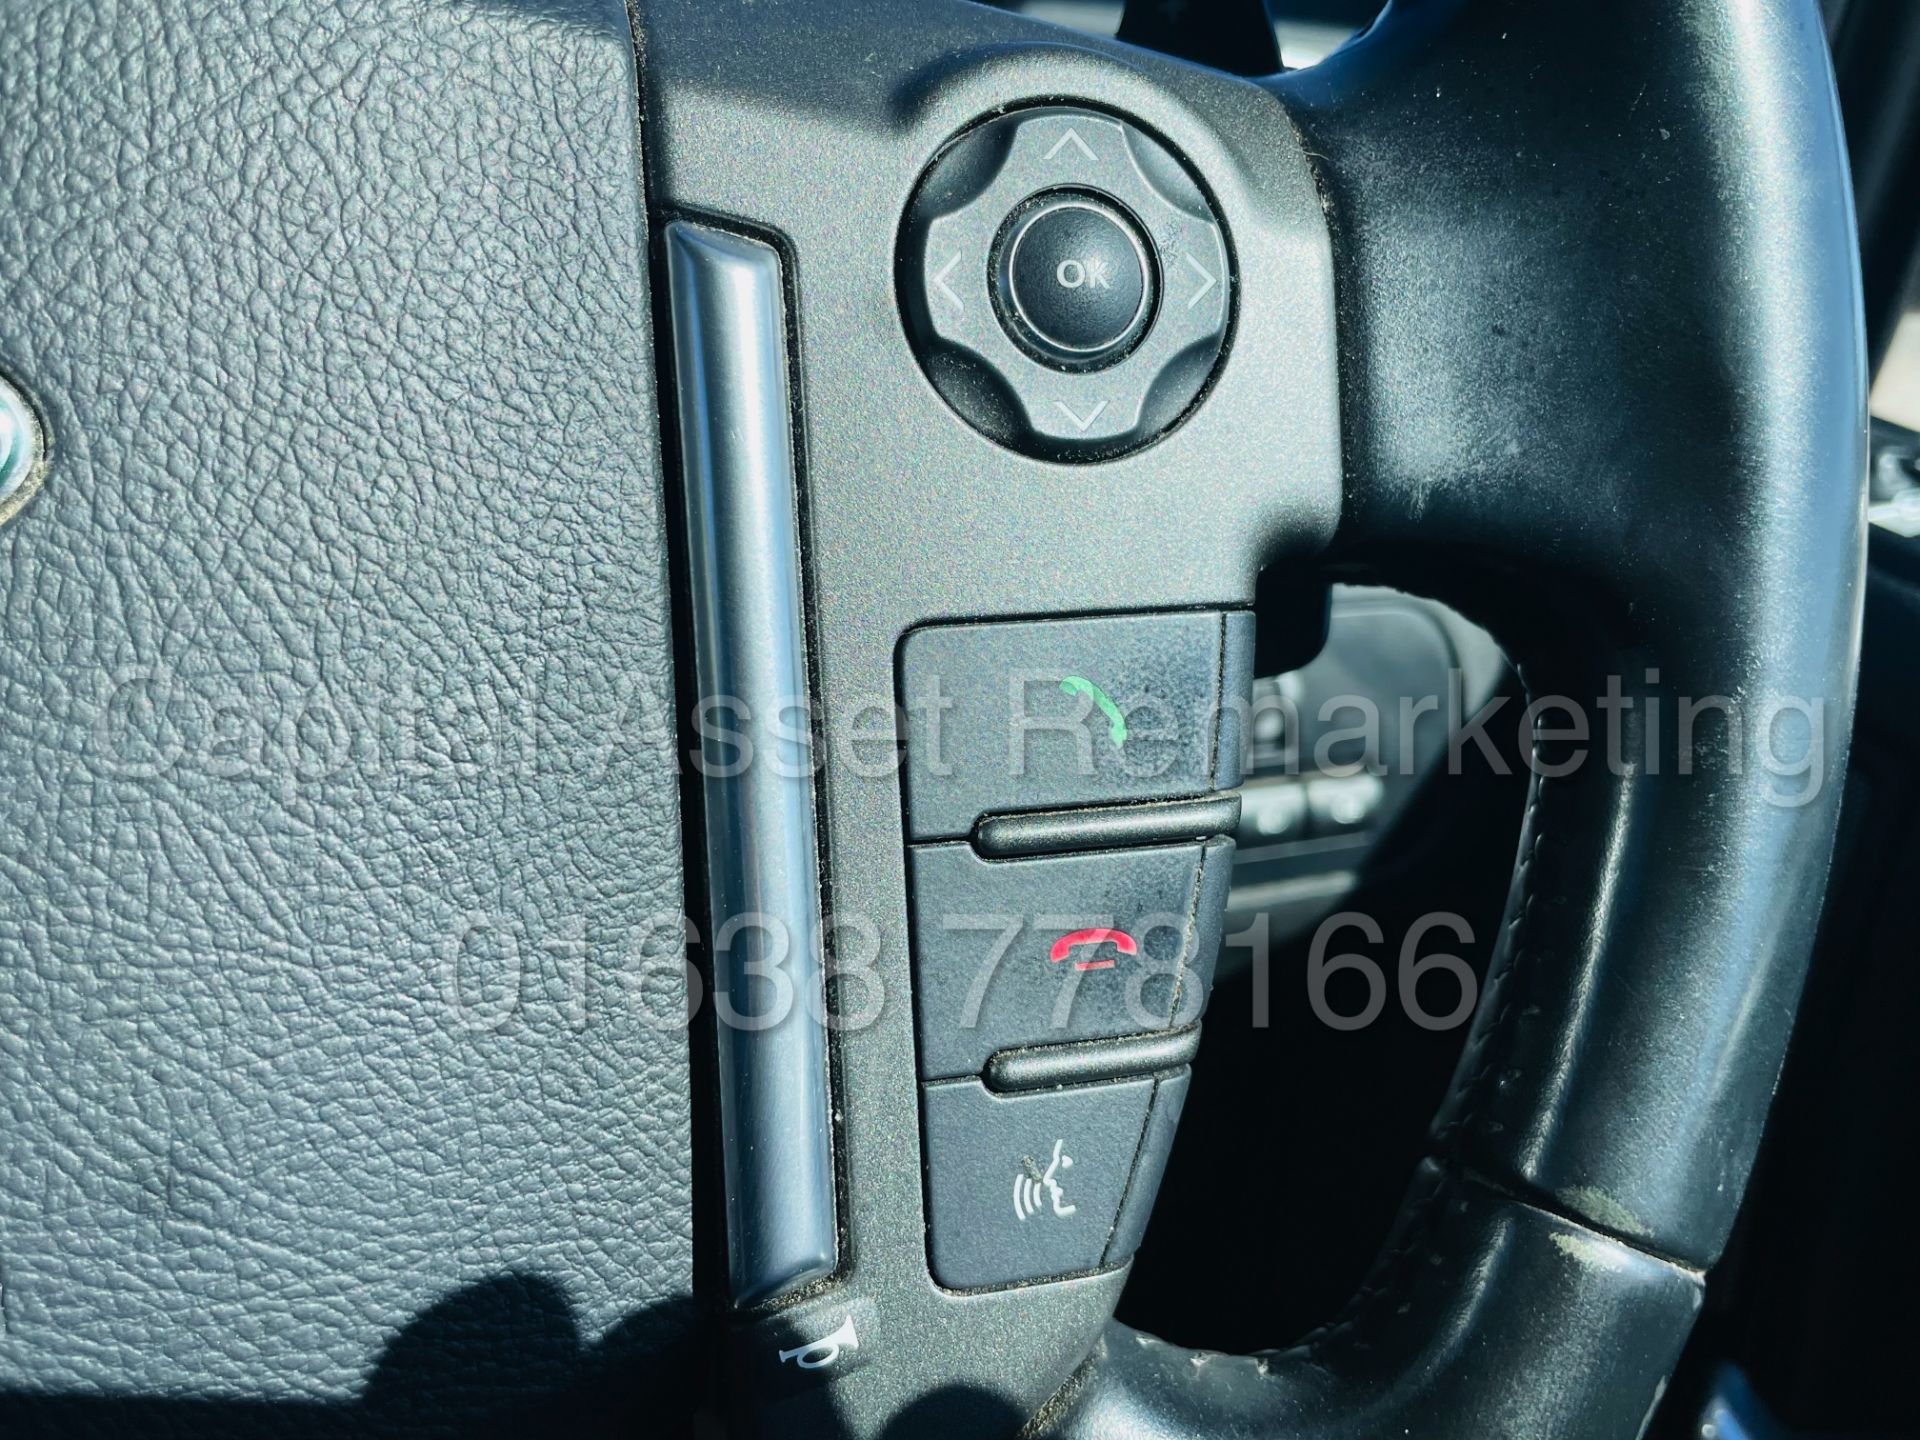 LAND ROVER DISCOVERY *SE TECH* 7 SEATER SUV (2015 MODEL) '3.0 SDV6 - AUTOMATIC' *MASSIVE SPEC* - Image 53 of 54